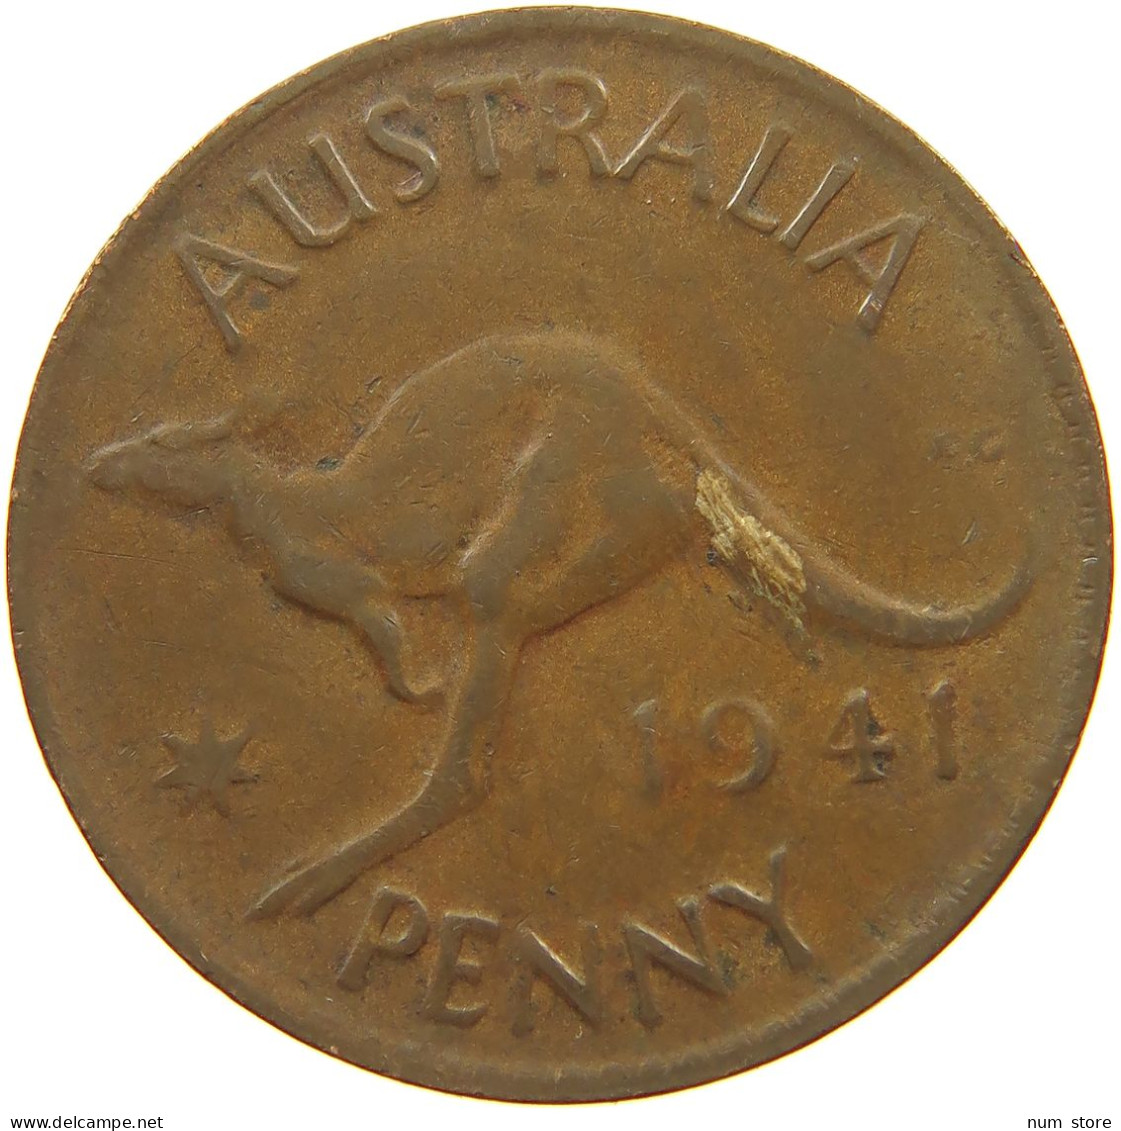 AUSTRALIA PENNY 1941 #s077 0111 - Penny